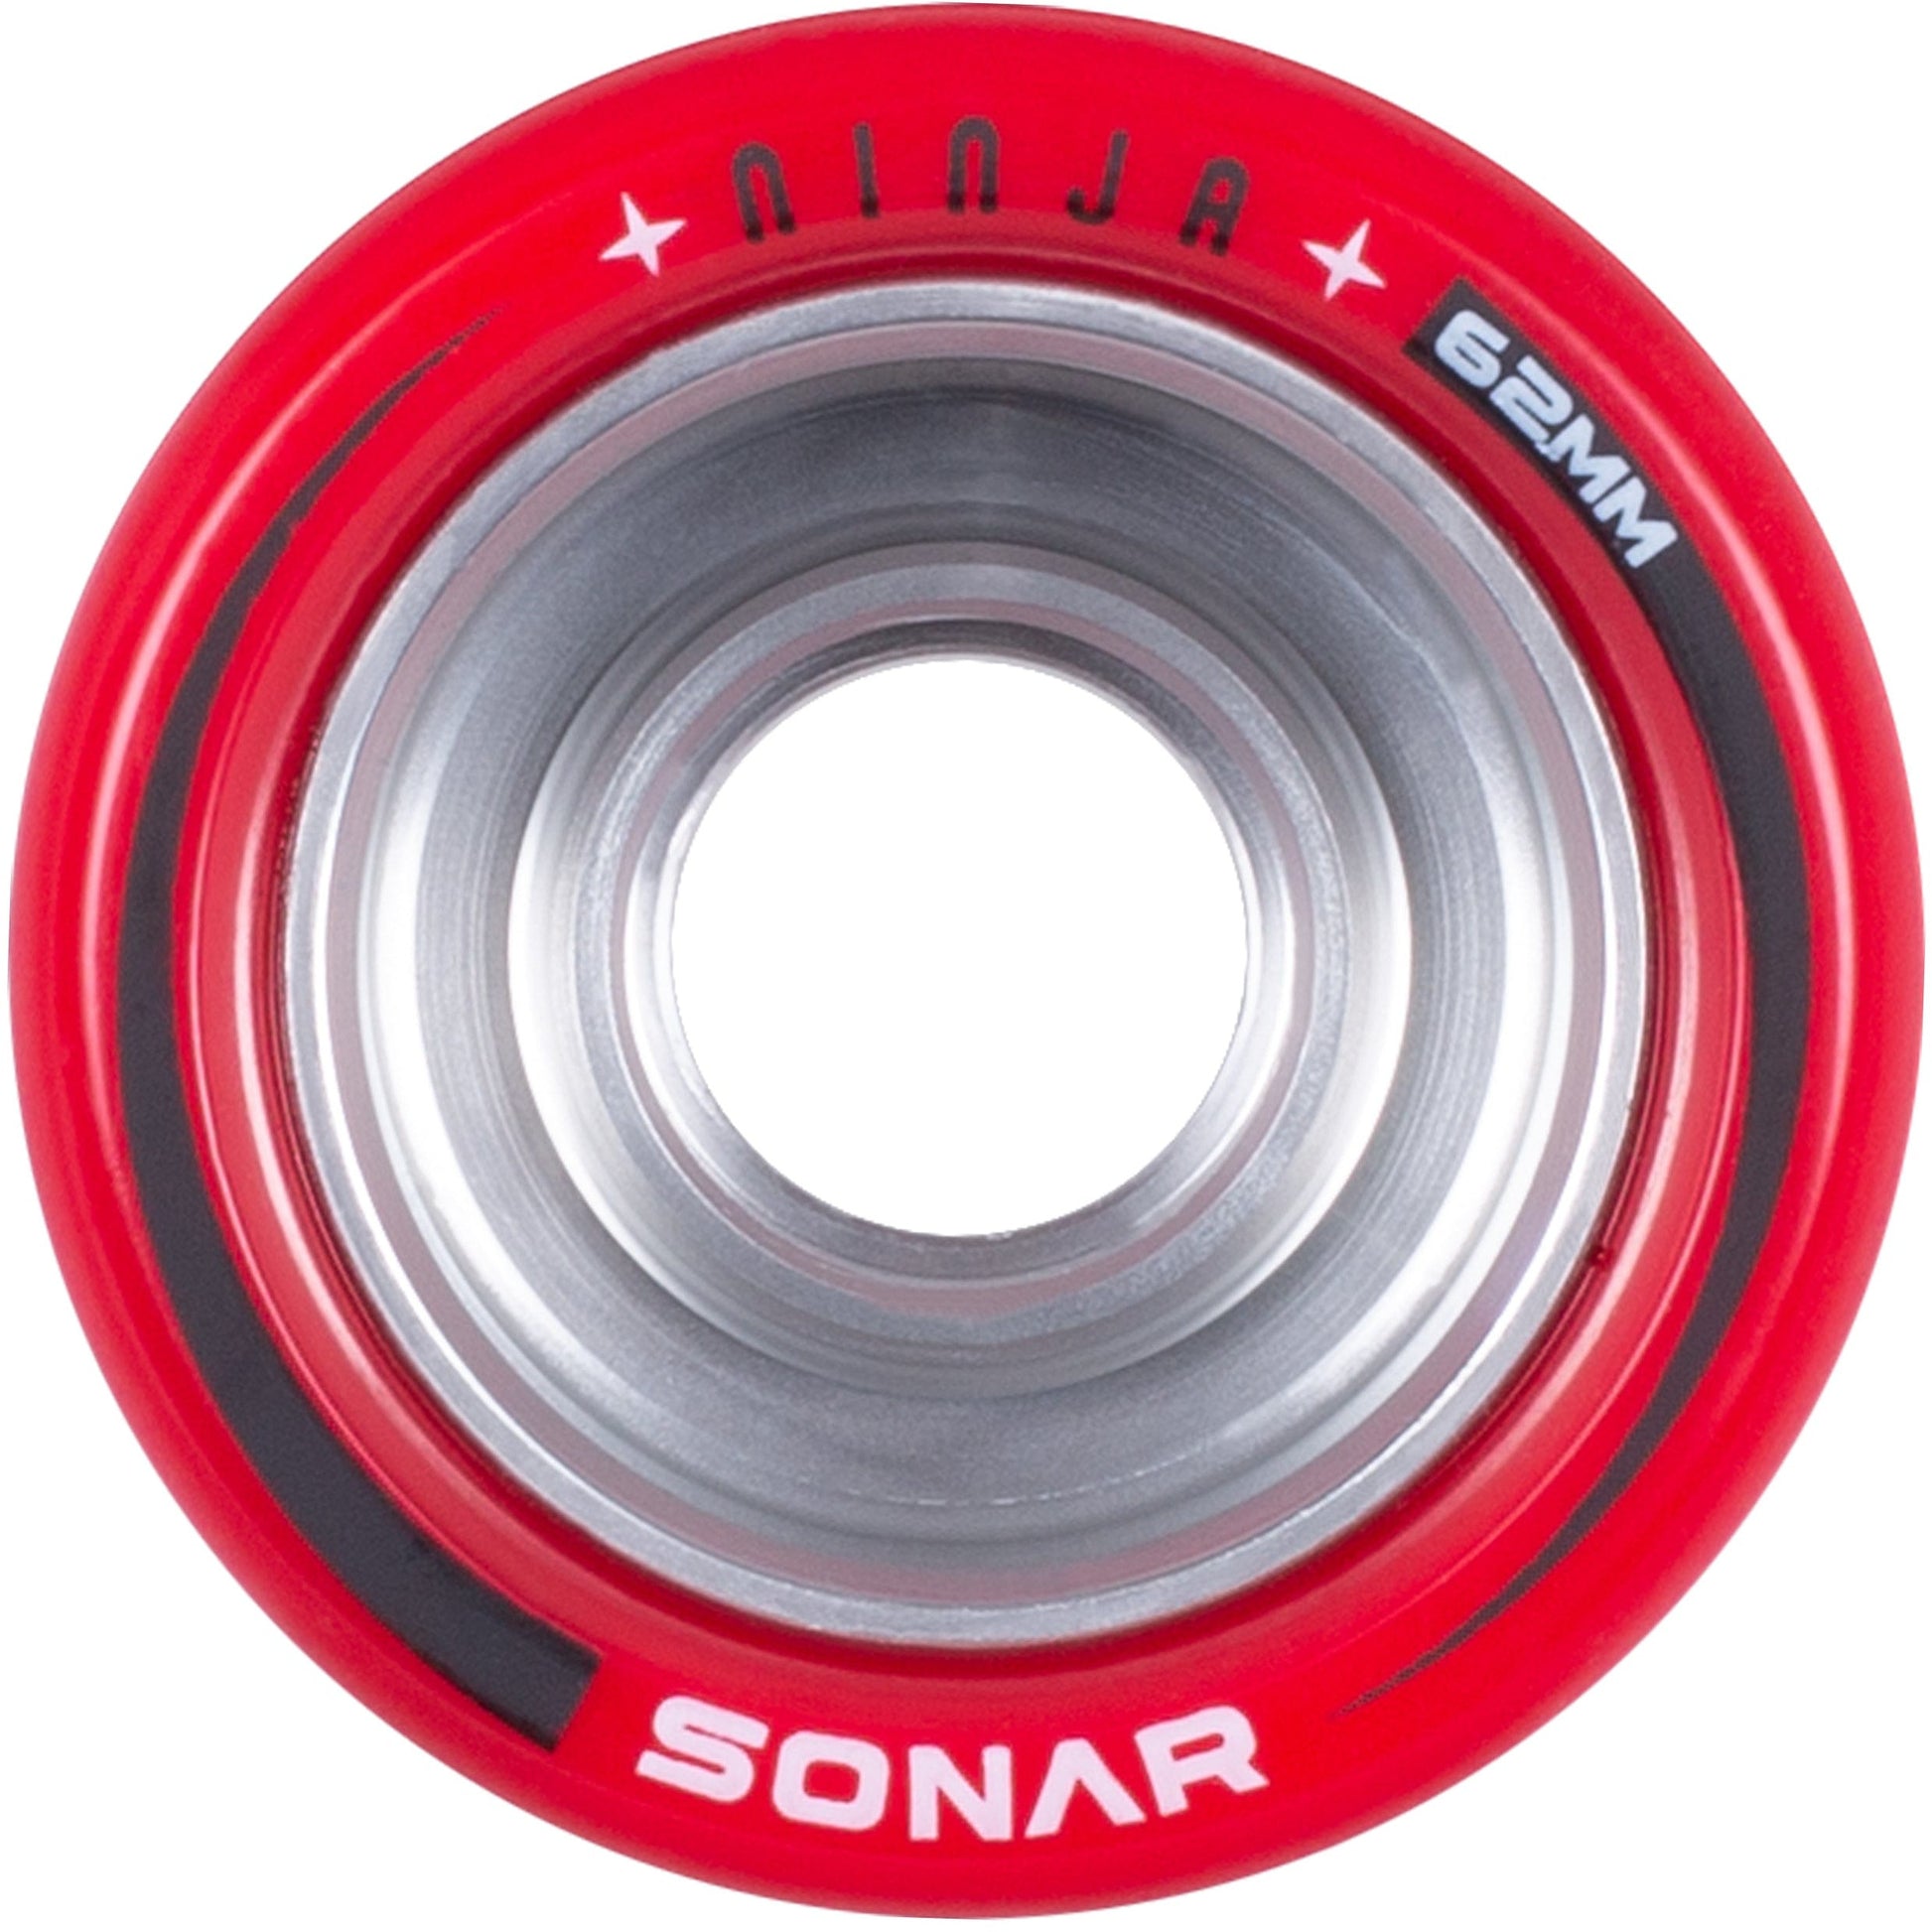  Sonar Ninja Speed 62mm x 43mm Wheels (4-Pack) The Groove Skate Shop The Groove Skate Shop